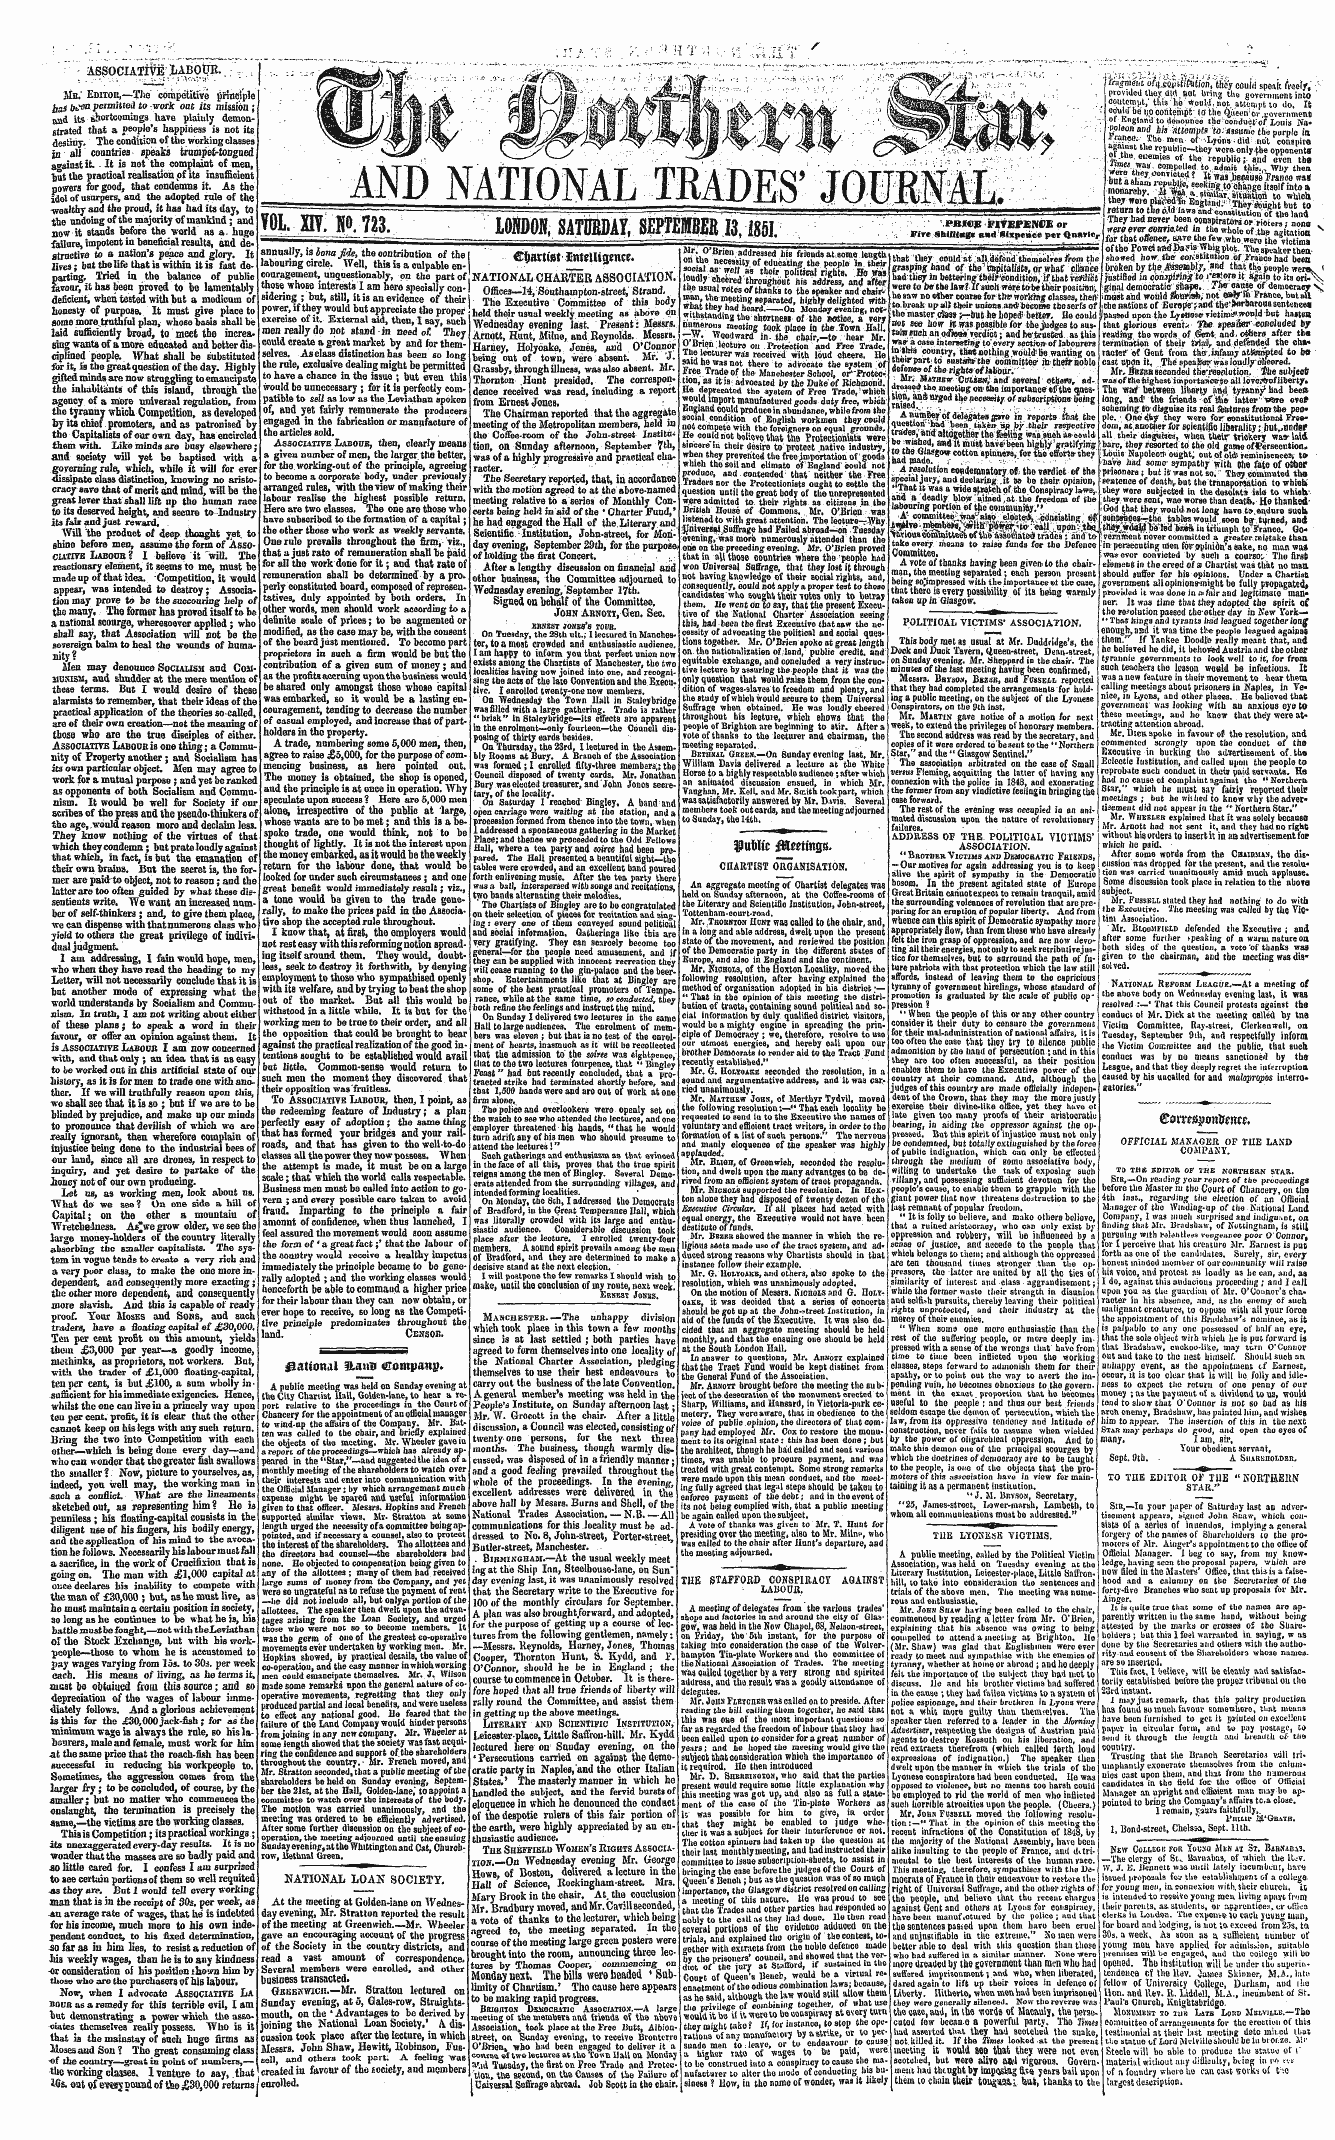 Northern Star (1837-1852): jS F Y, 2nd edition - Cfmvtist Intelligence